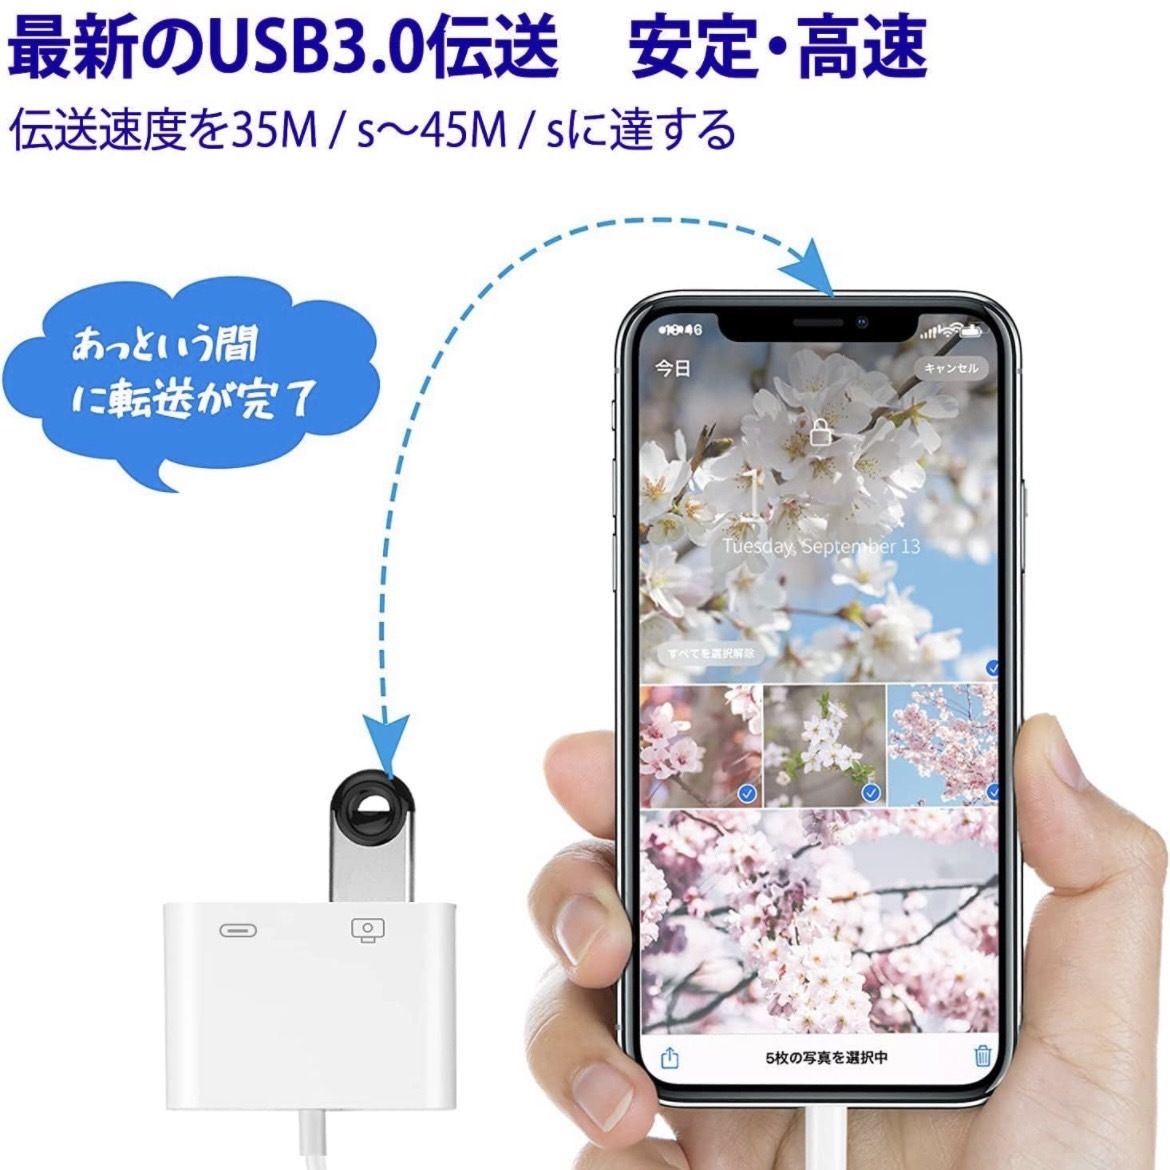 iPhone USBカメラアダプタUSB3.0 MFi認証製、Lightning USB 変換アダプタiPhone 高速伝送 双方向 写真転送